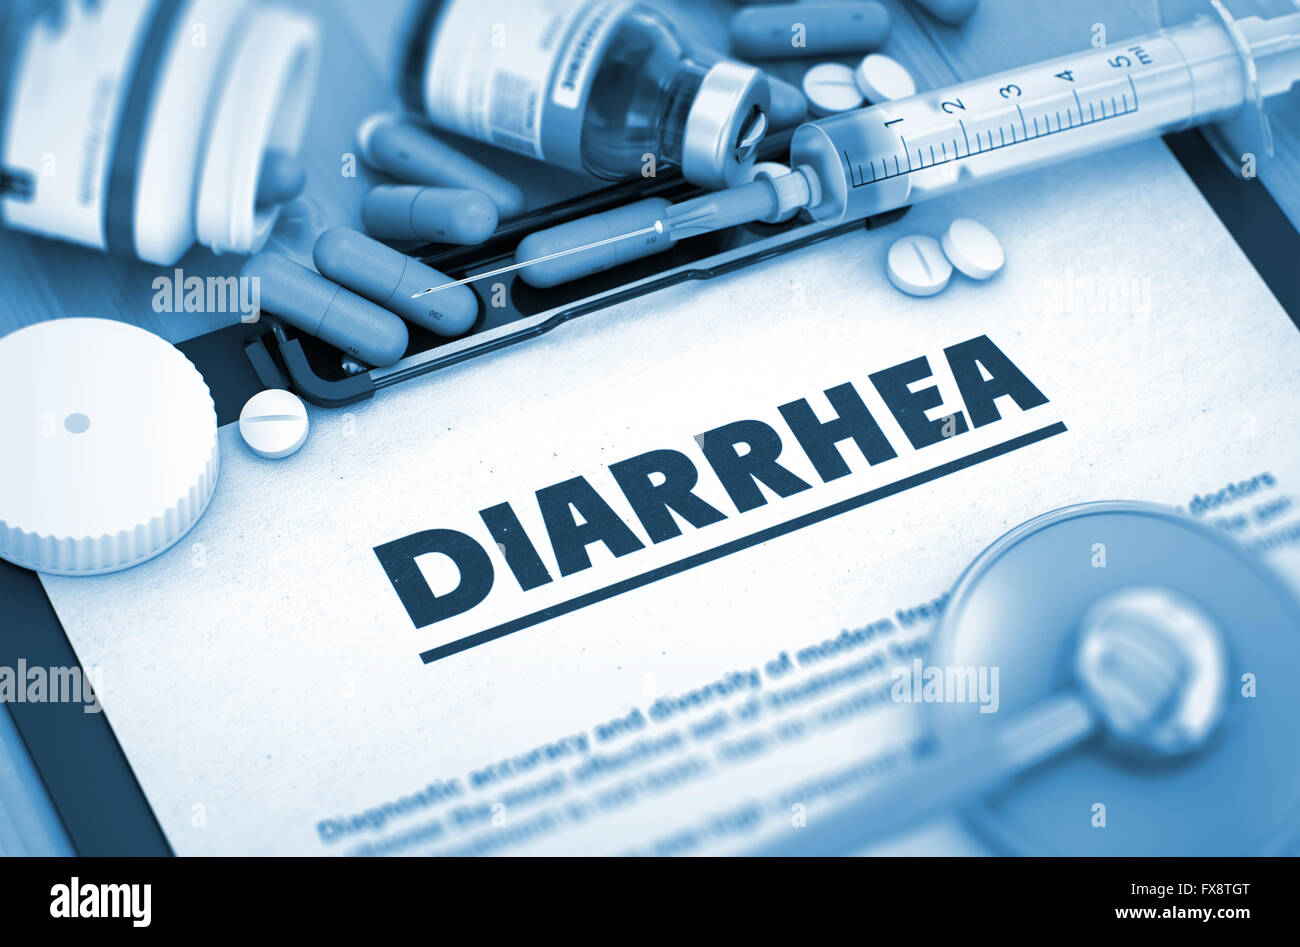 La diarrea. Concepto médico. Foto de stock